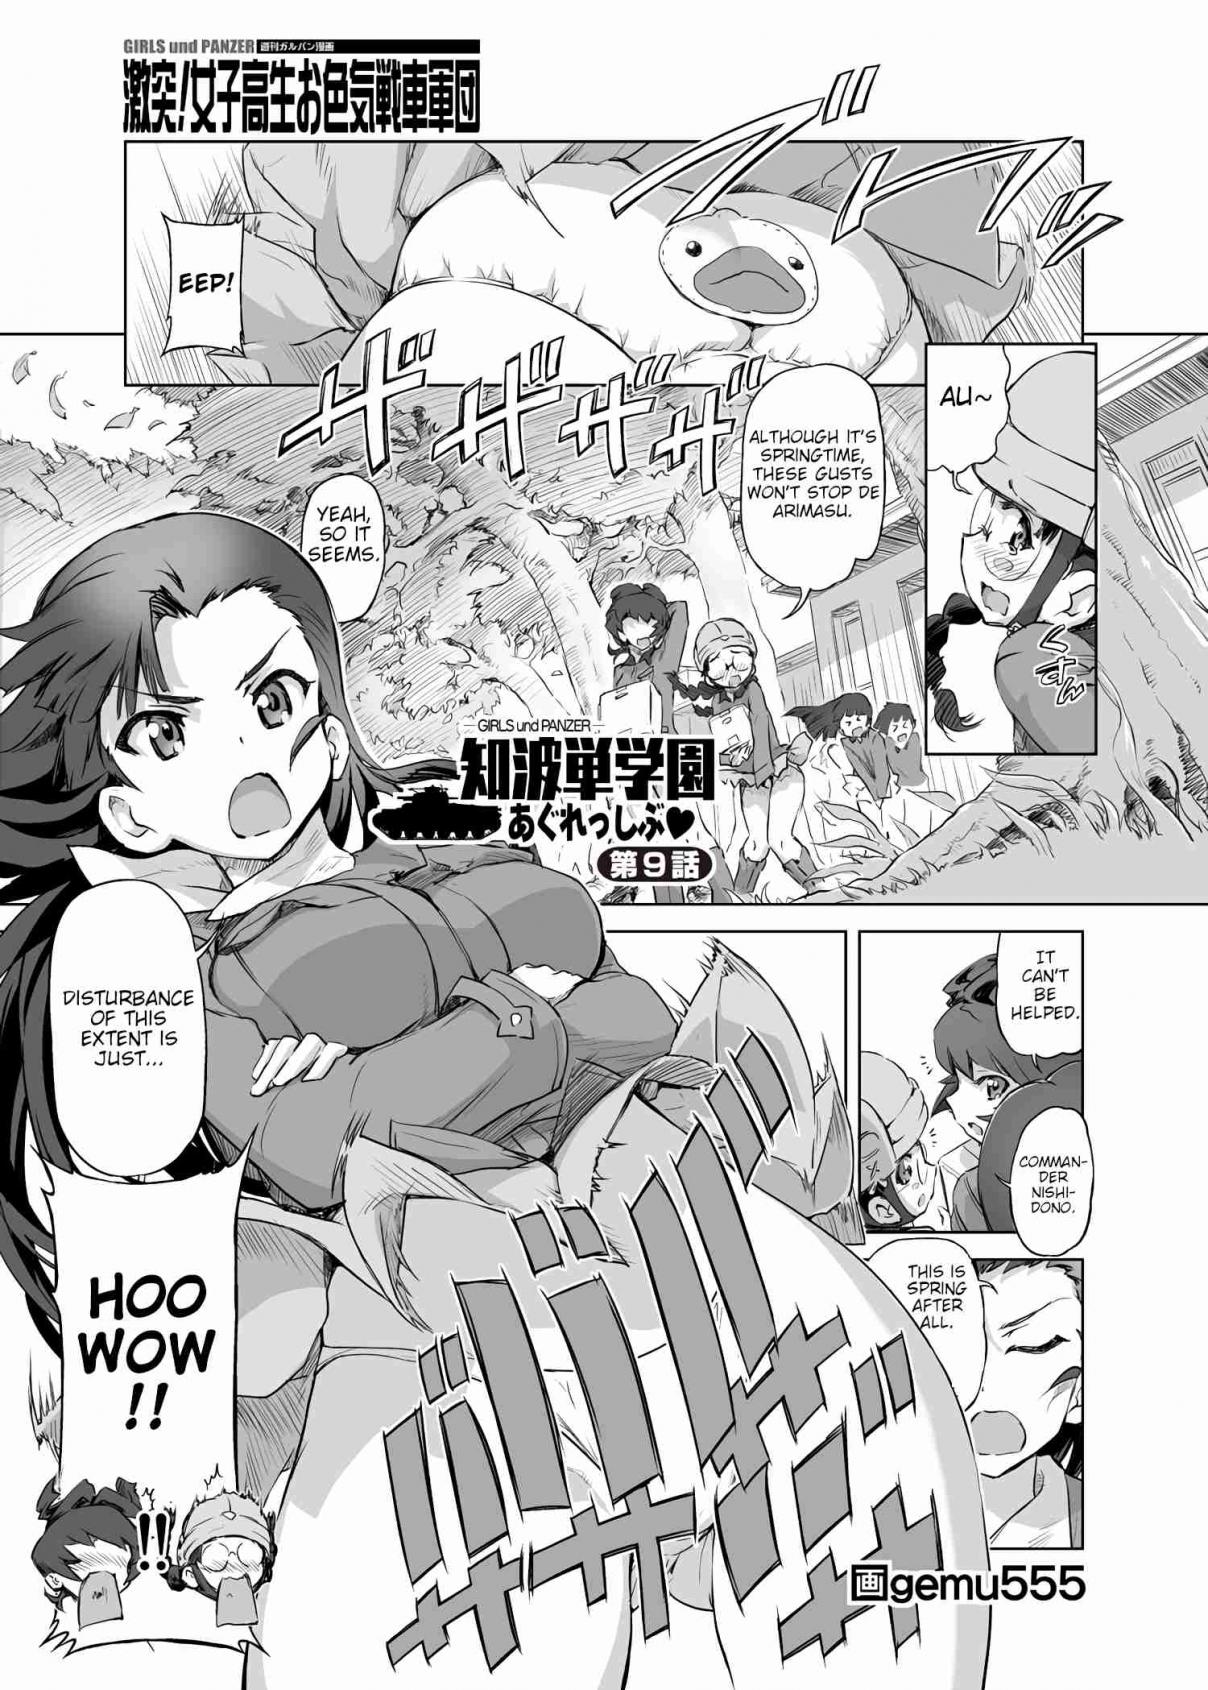 Girls und Panzer Chi HaTan Academy Aggressive (Doujinshi) Vol. 1 Ch. 9